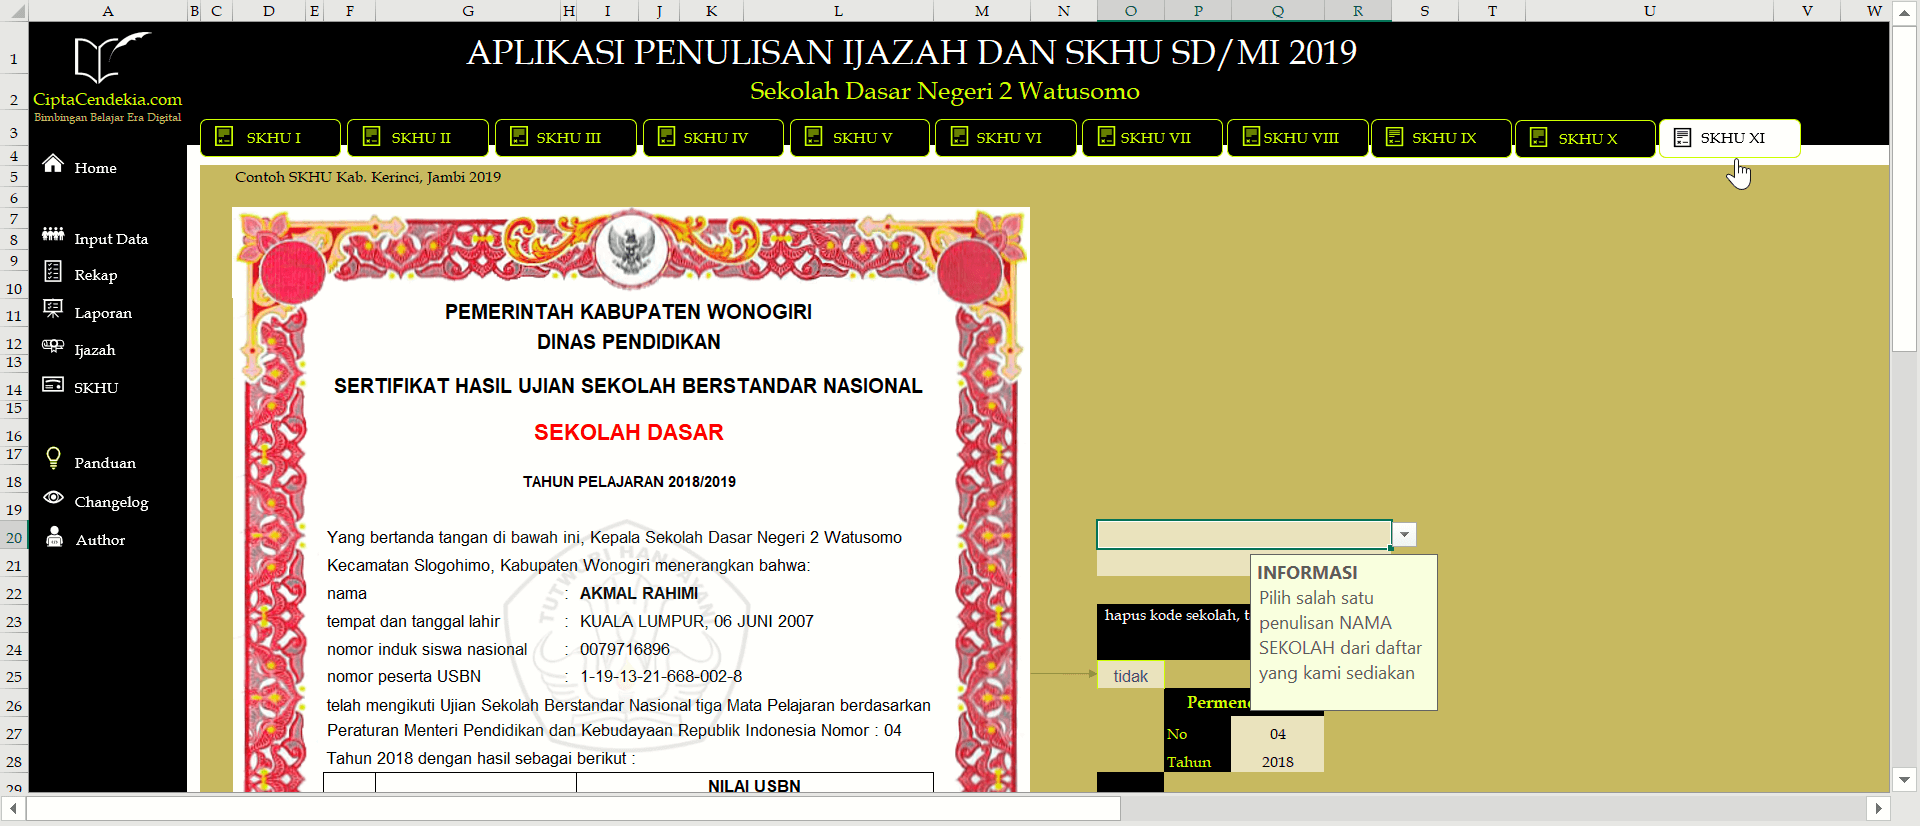 Download Aplikasi SKHU SD 2019 Terbaru - ciptacendekia.com